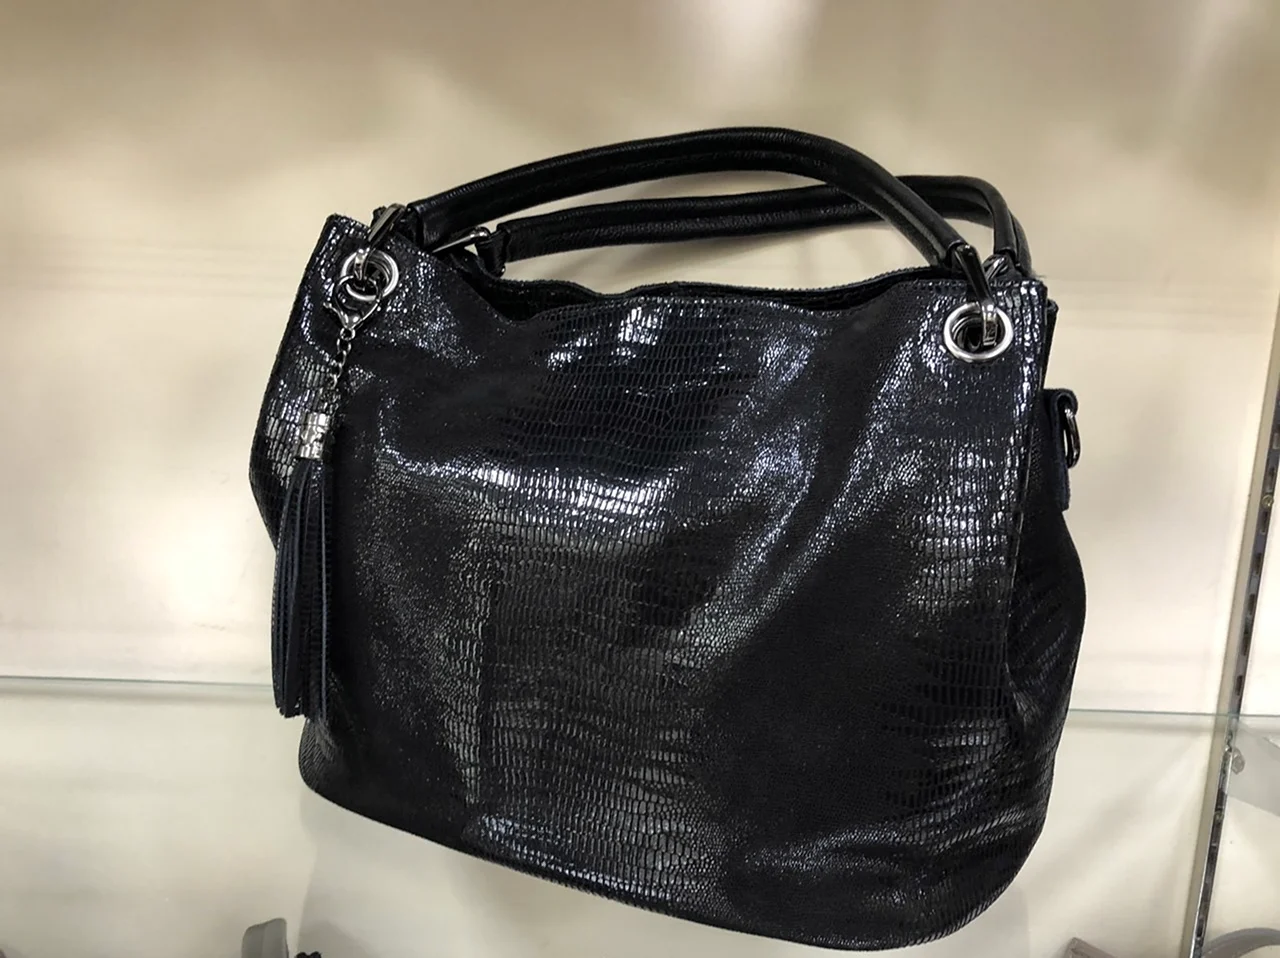 DFS Leather сумки Fashion черная сумка